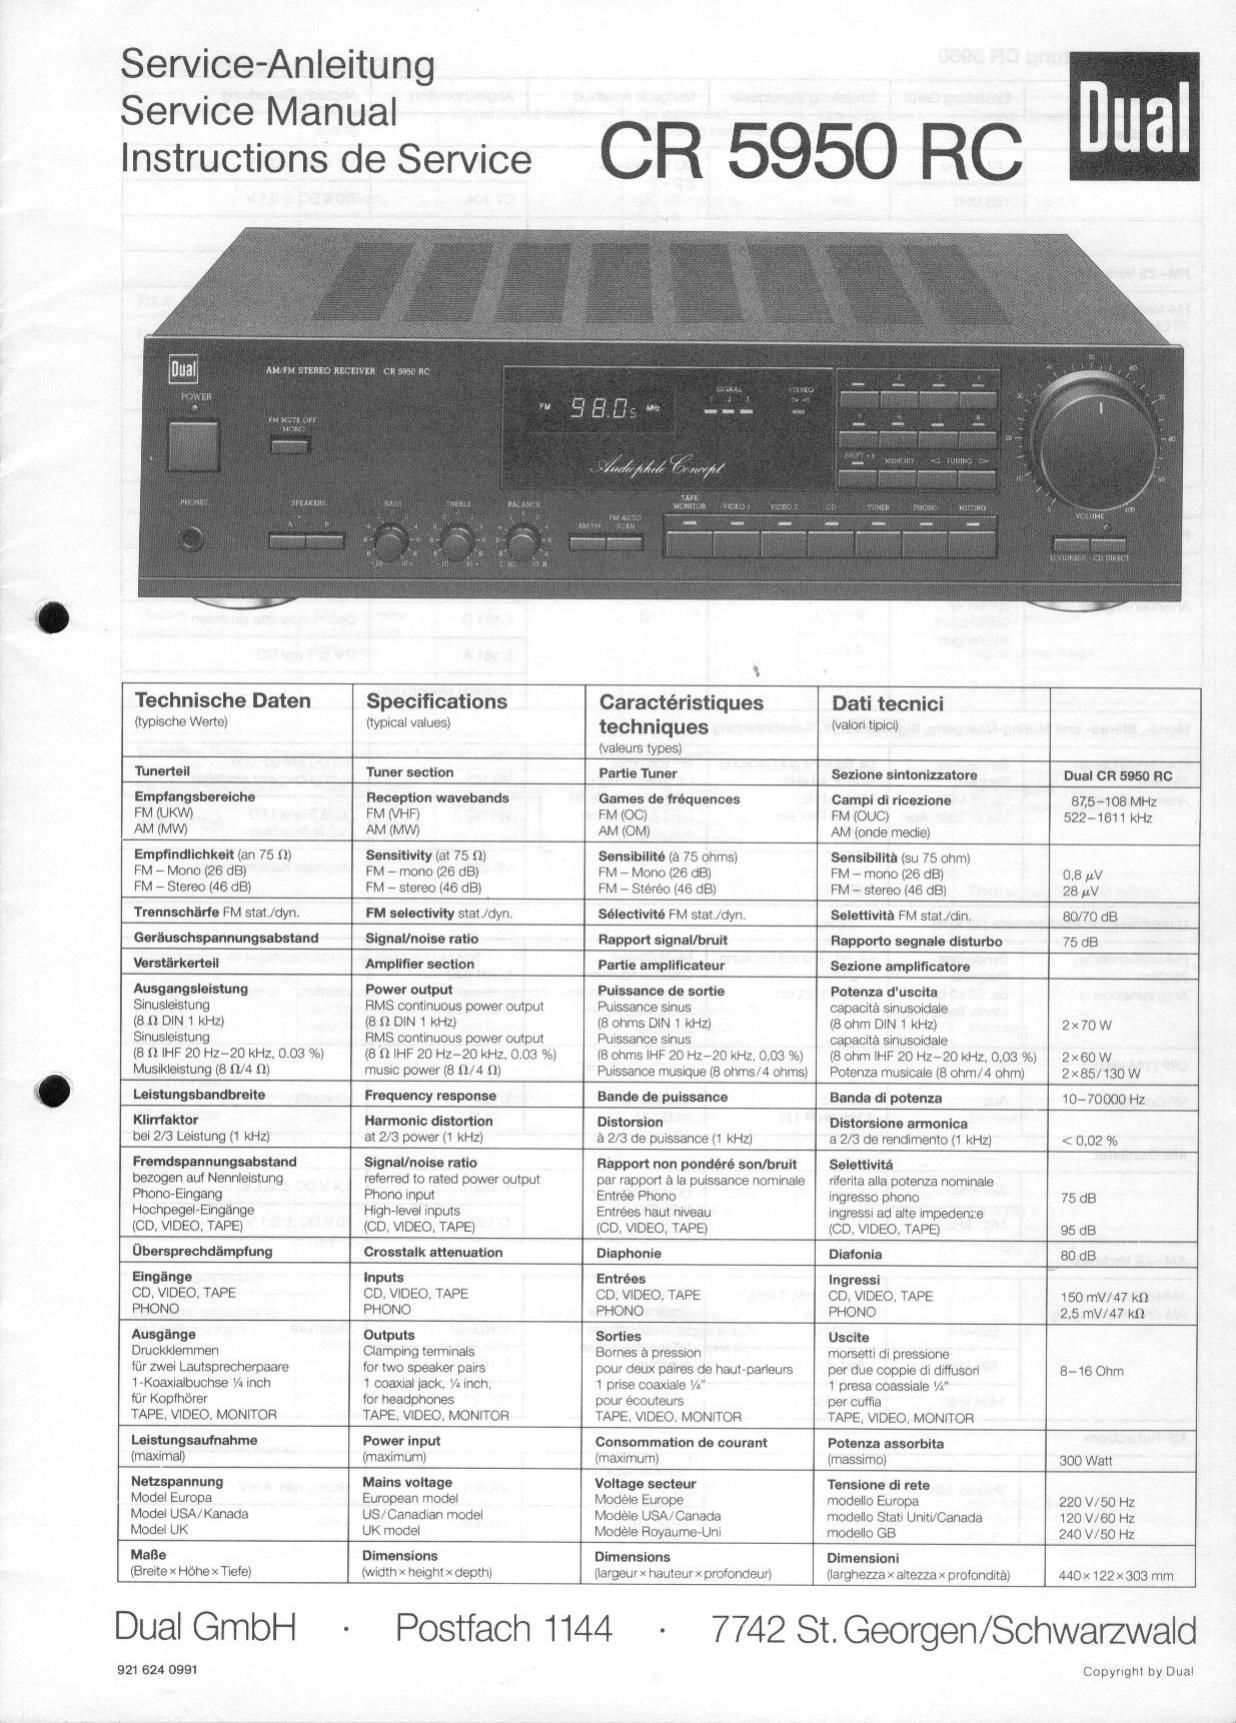 Dual CR 950 RC Service Manual